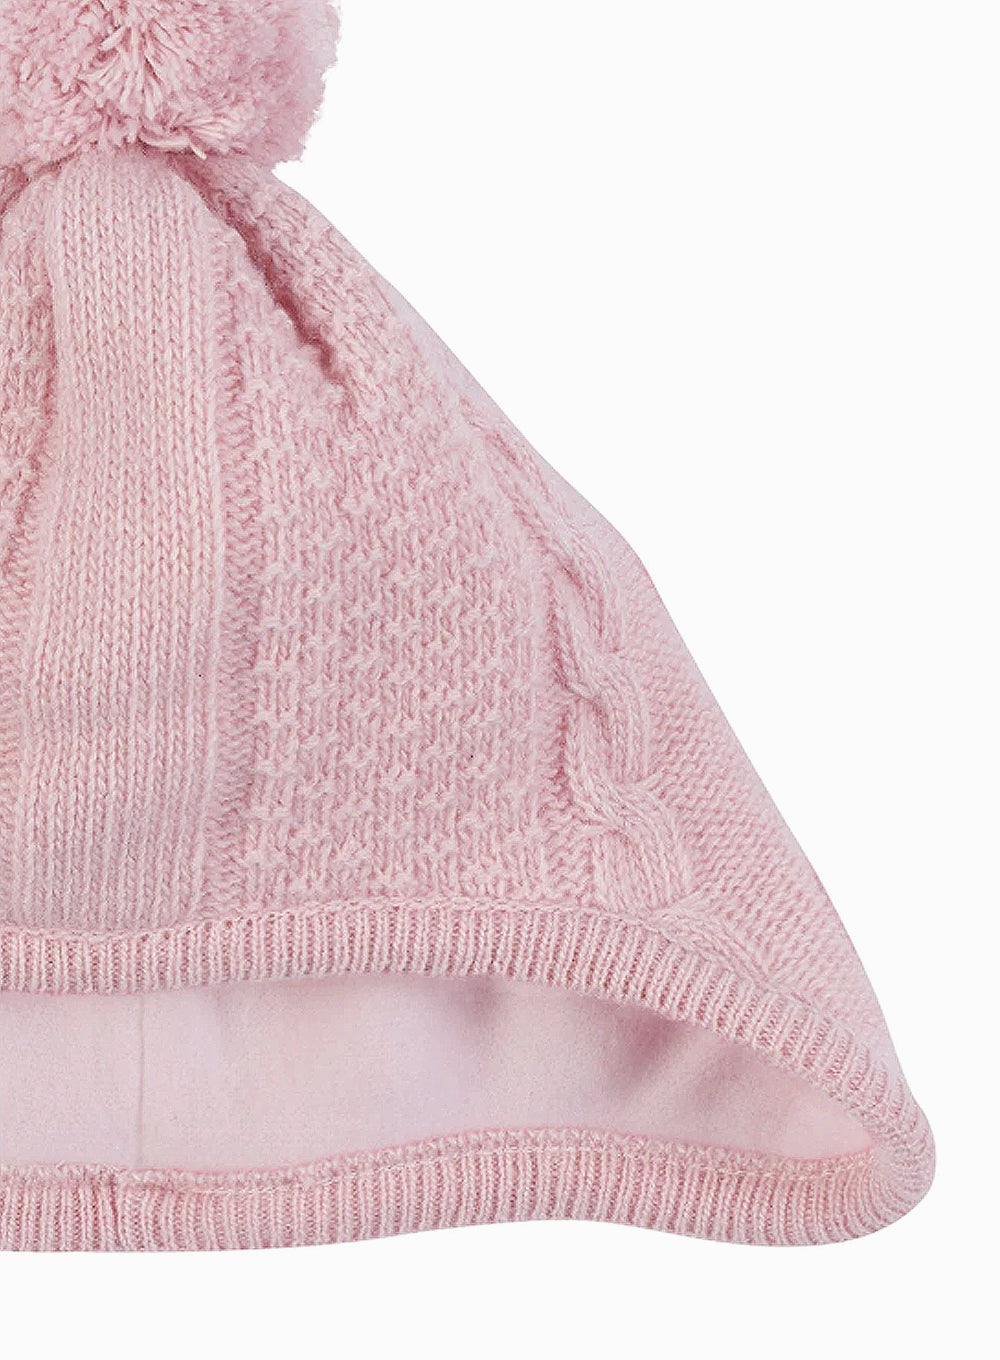 Baby Jamie Hat in Pink